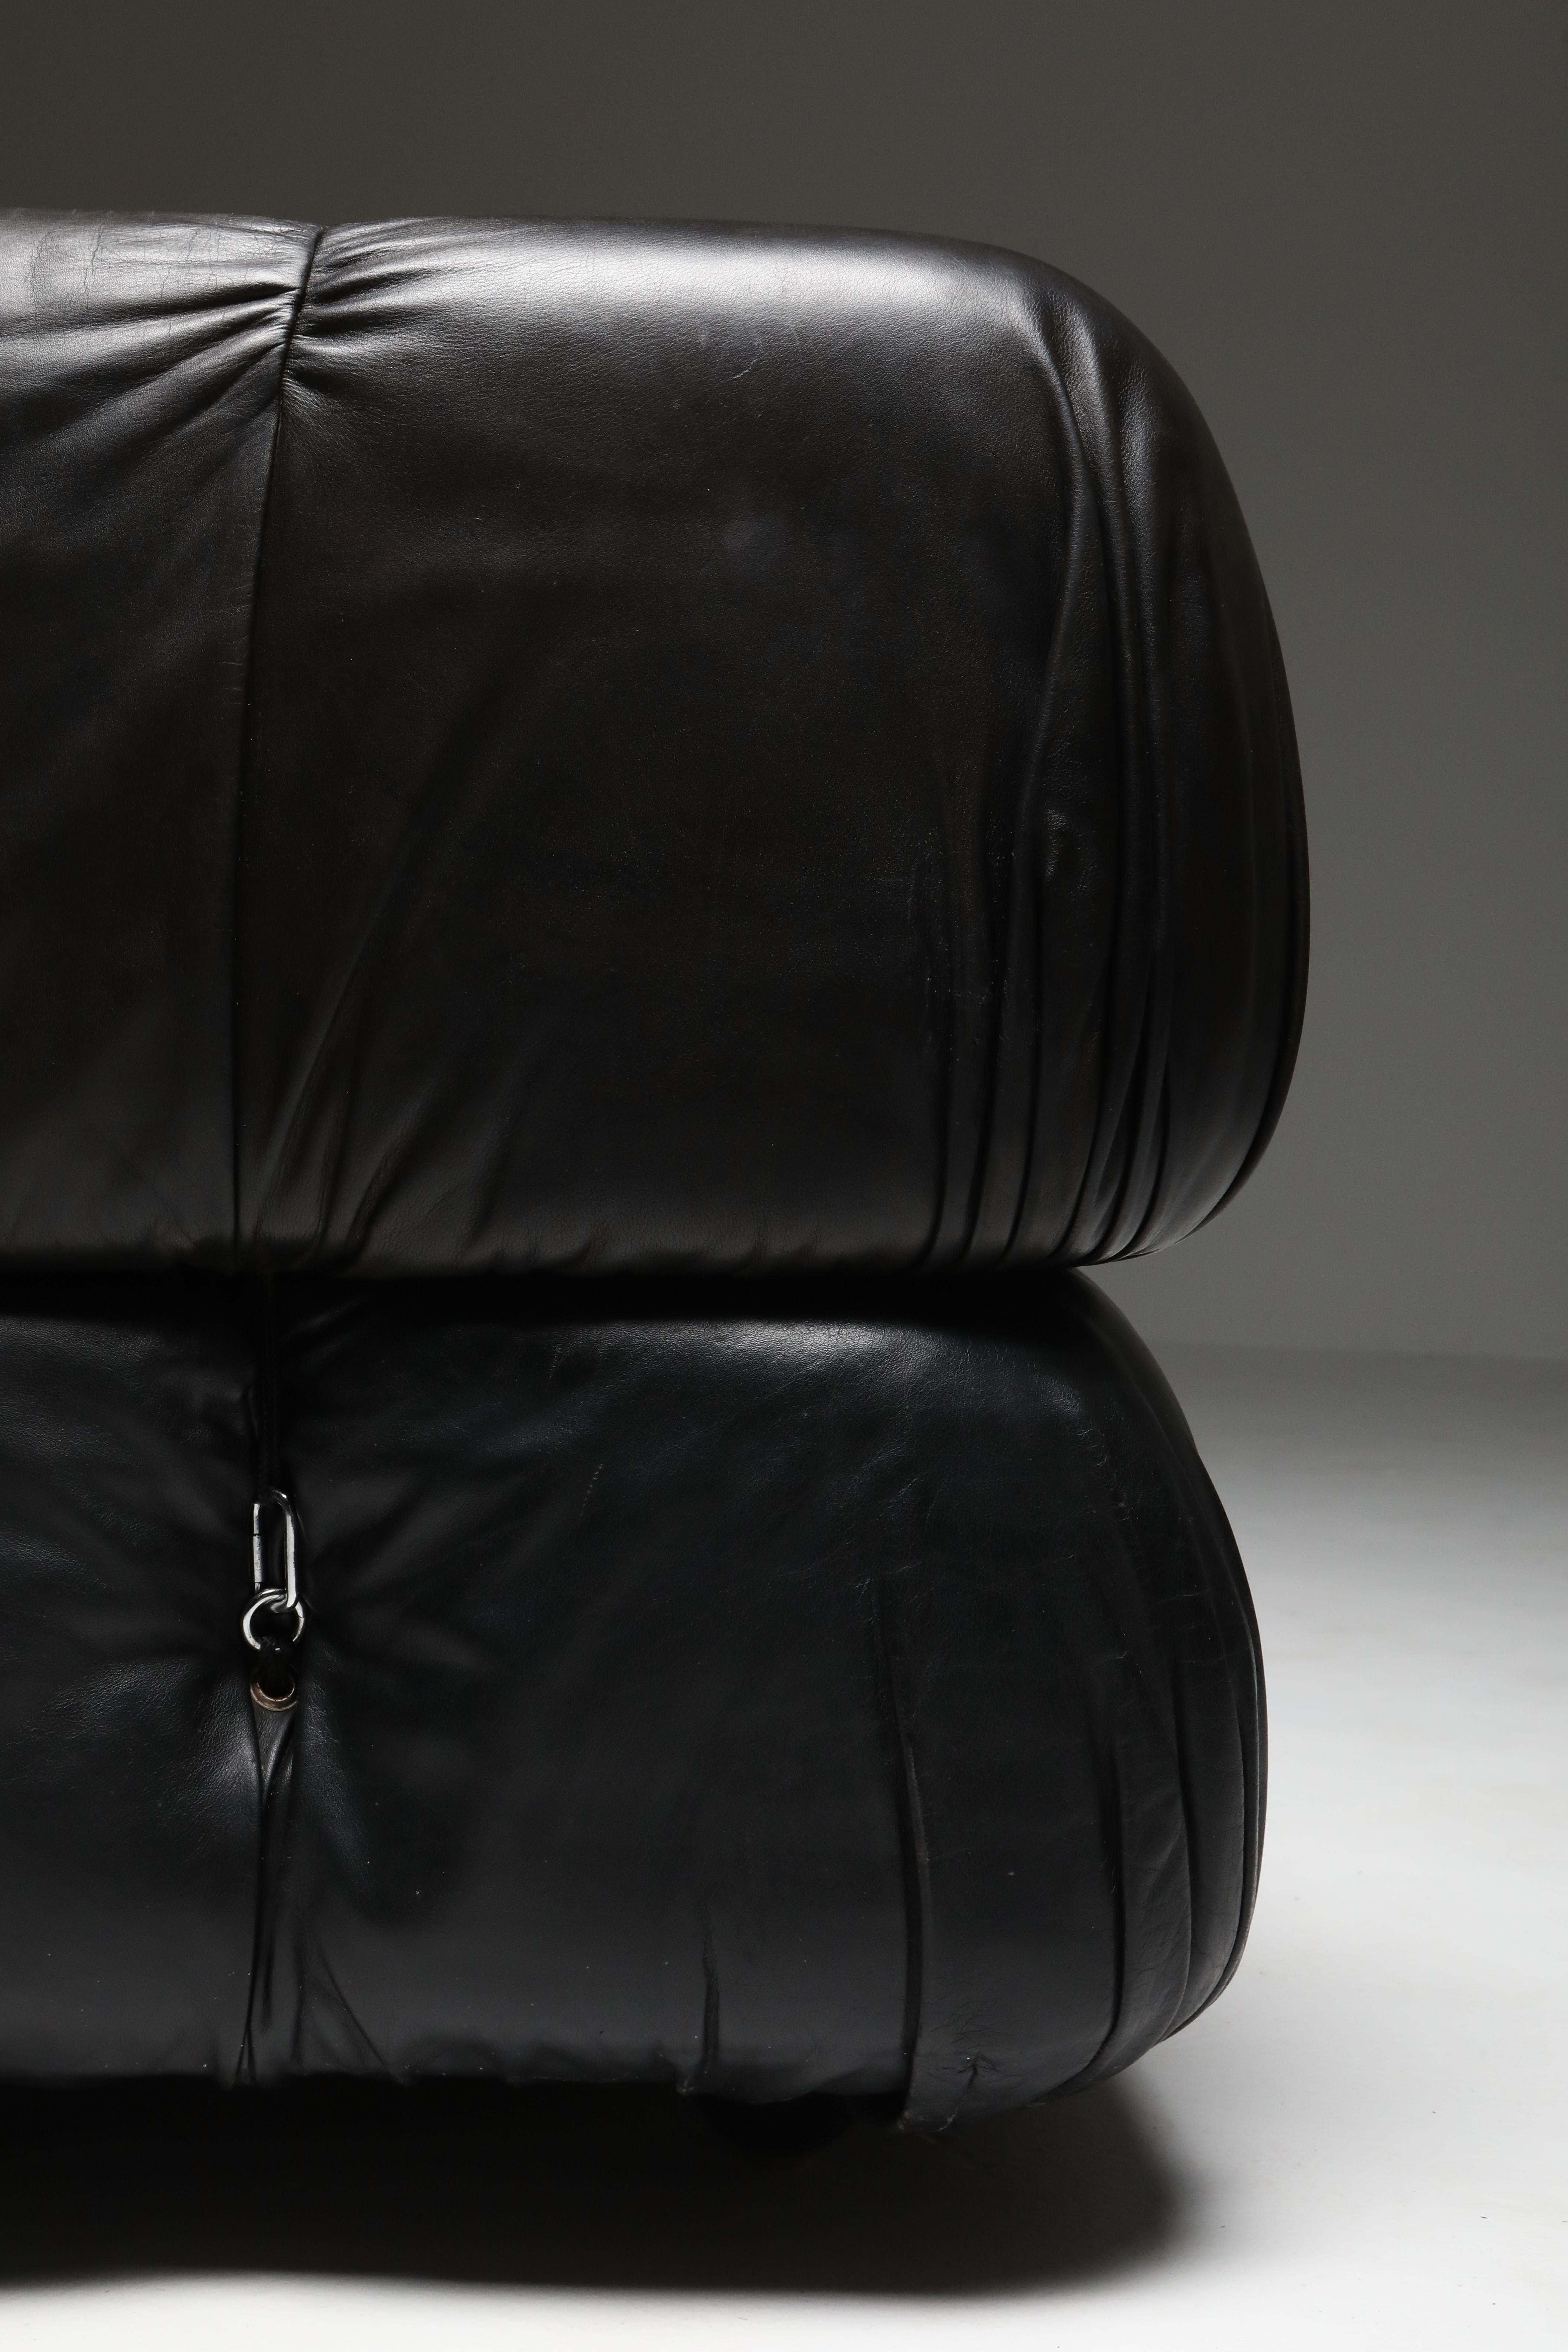 Camaleonda Black Leather Lounge chair 13